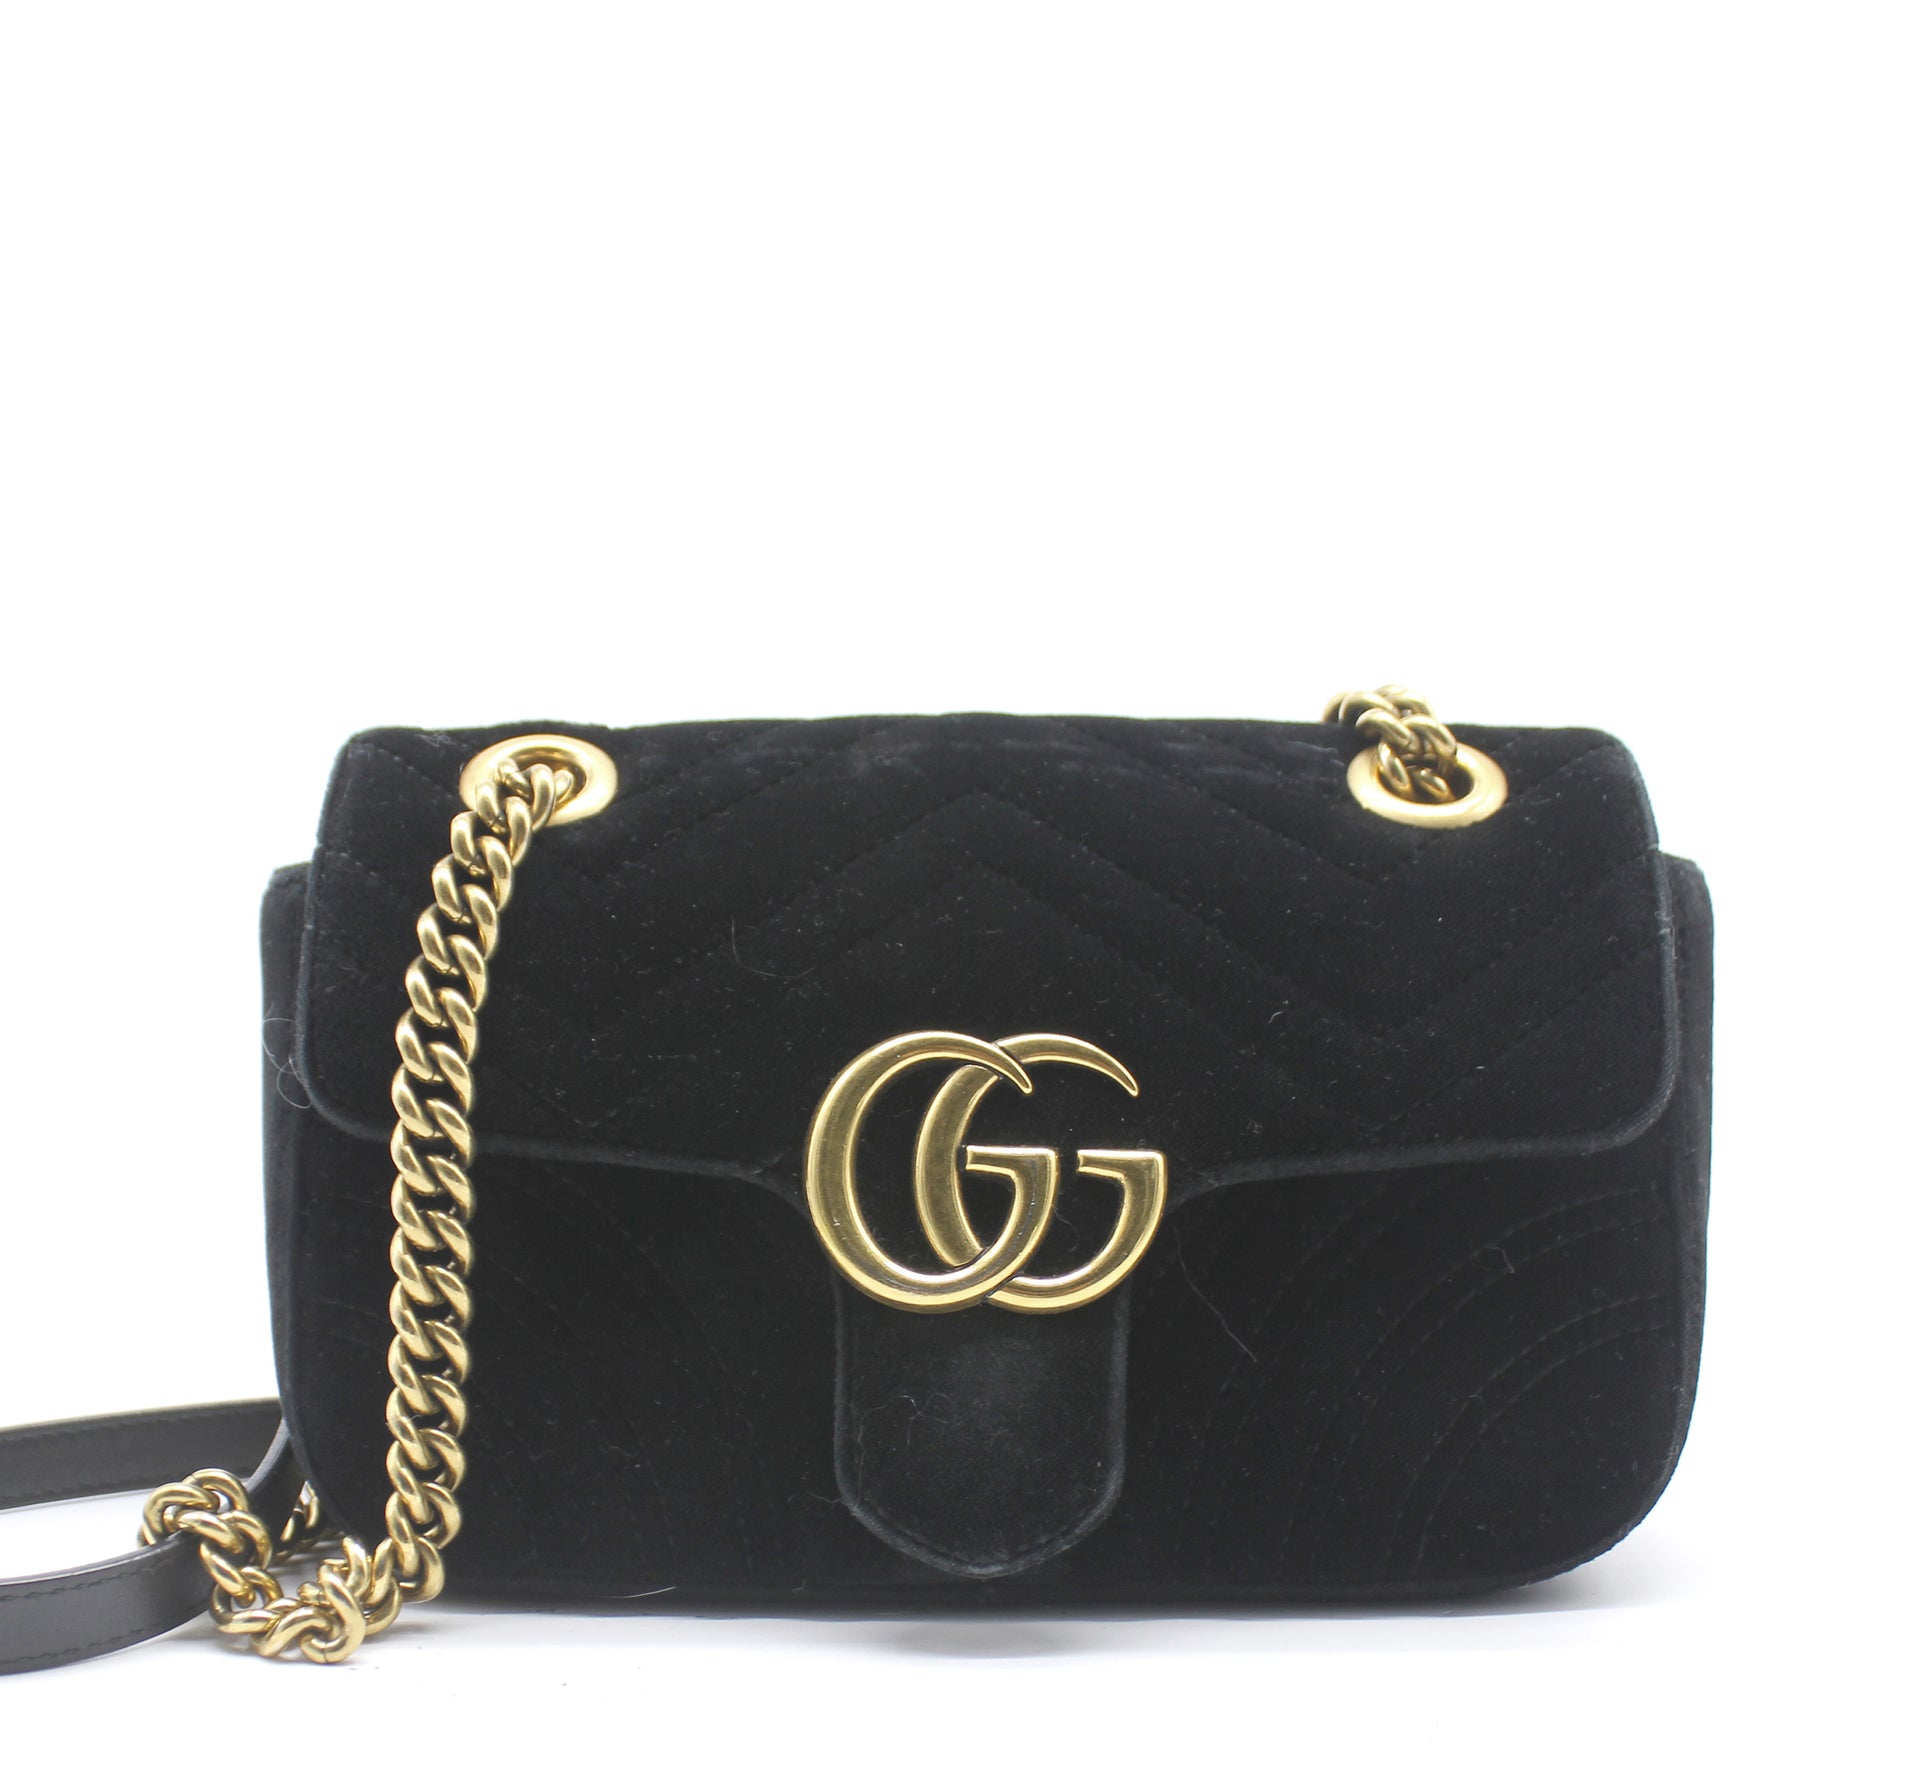 Gucci GG Marmont small Black shoulder bag